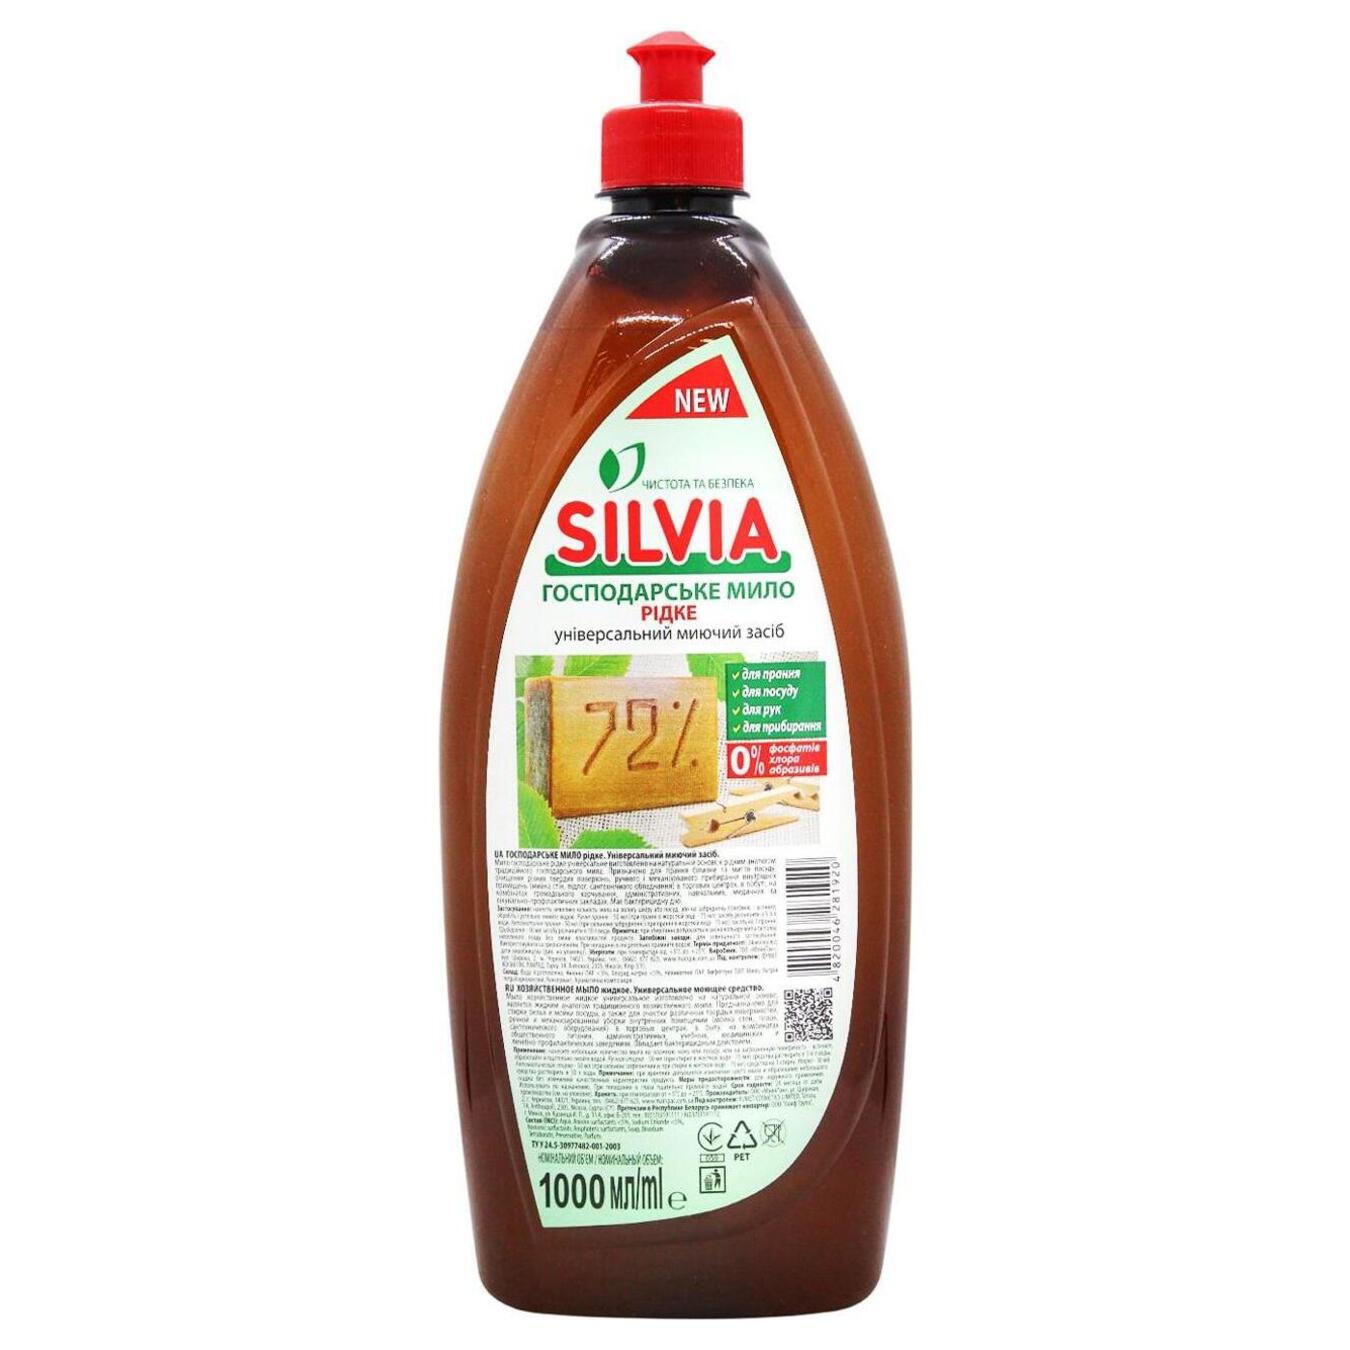 Silvia household liquid soap 1 l